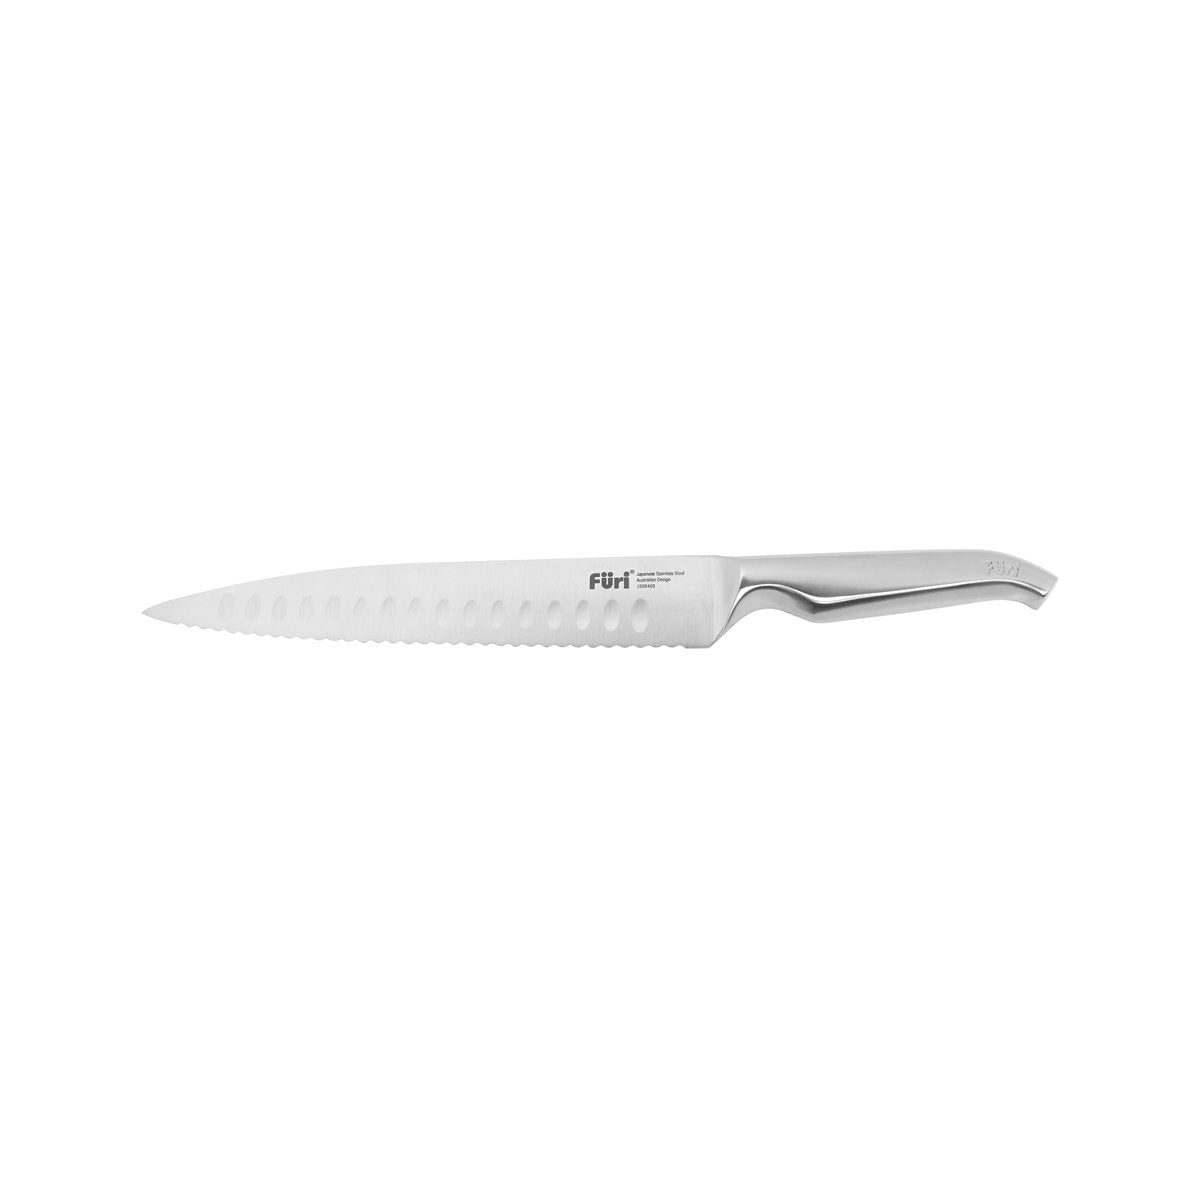 27196 Furi Pro Chefs Bread Knife 230mm Tomkin Australia Hospitality Supplies